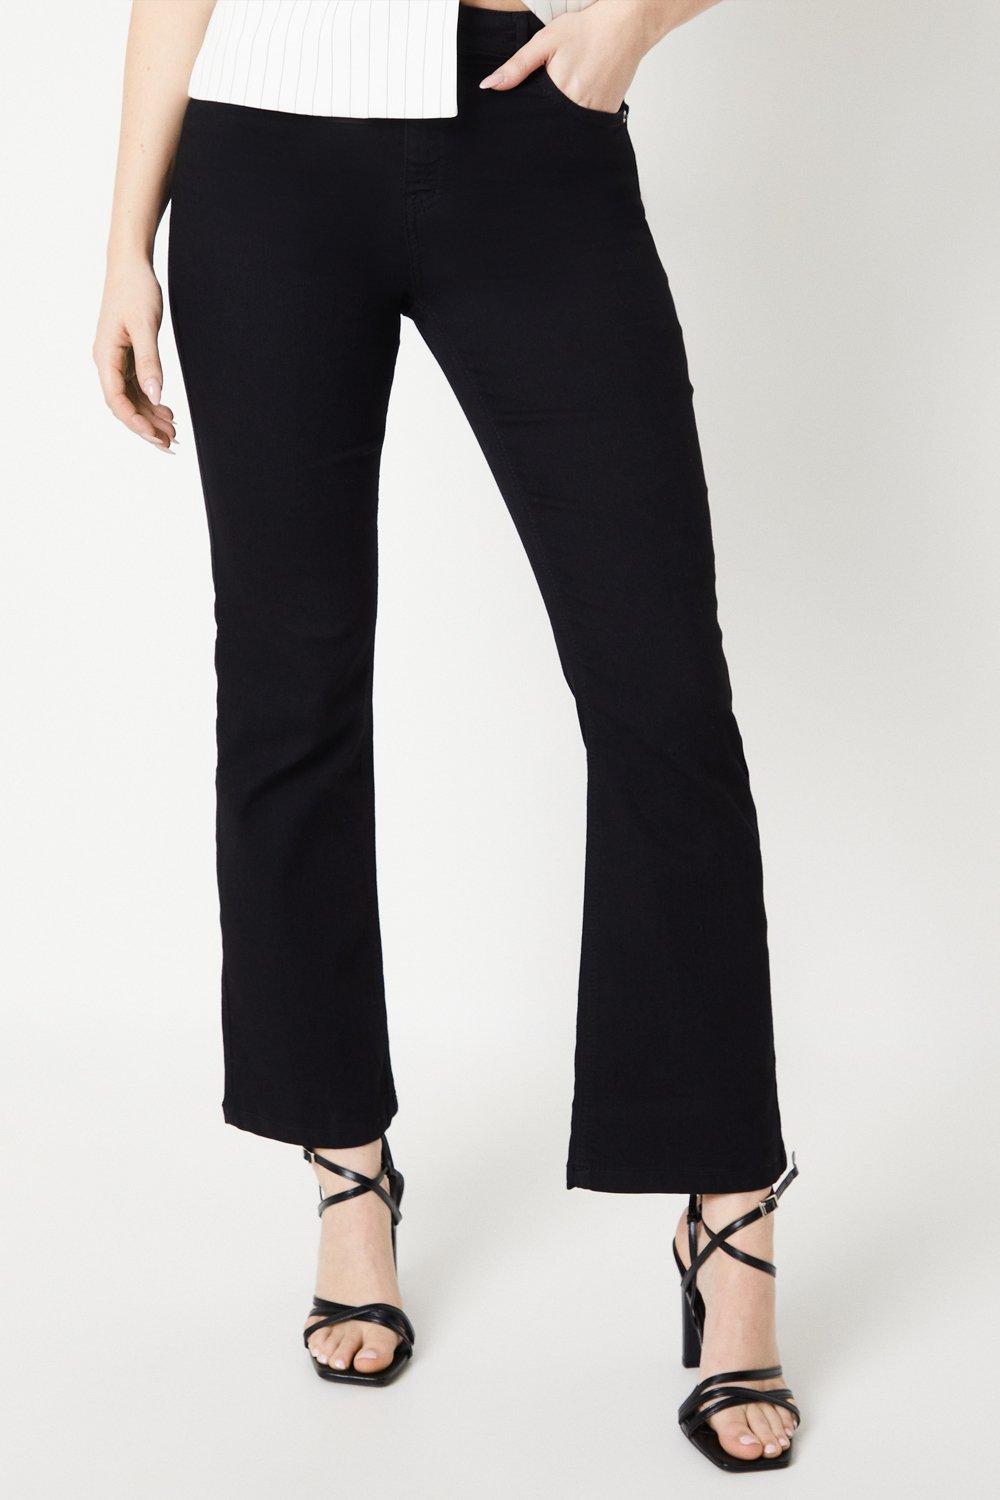 Women’s Comfort Stretch Bootcut Jeans - black - 12